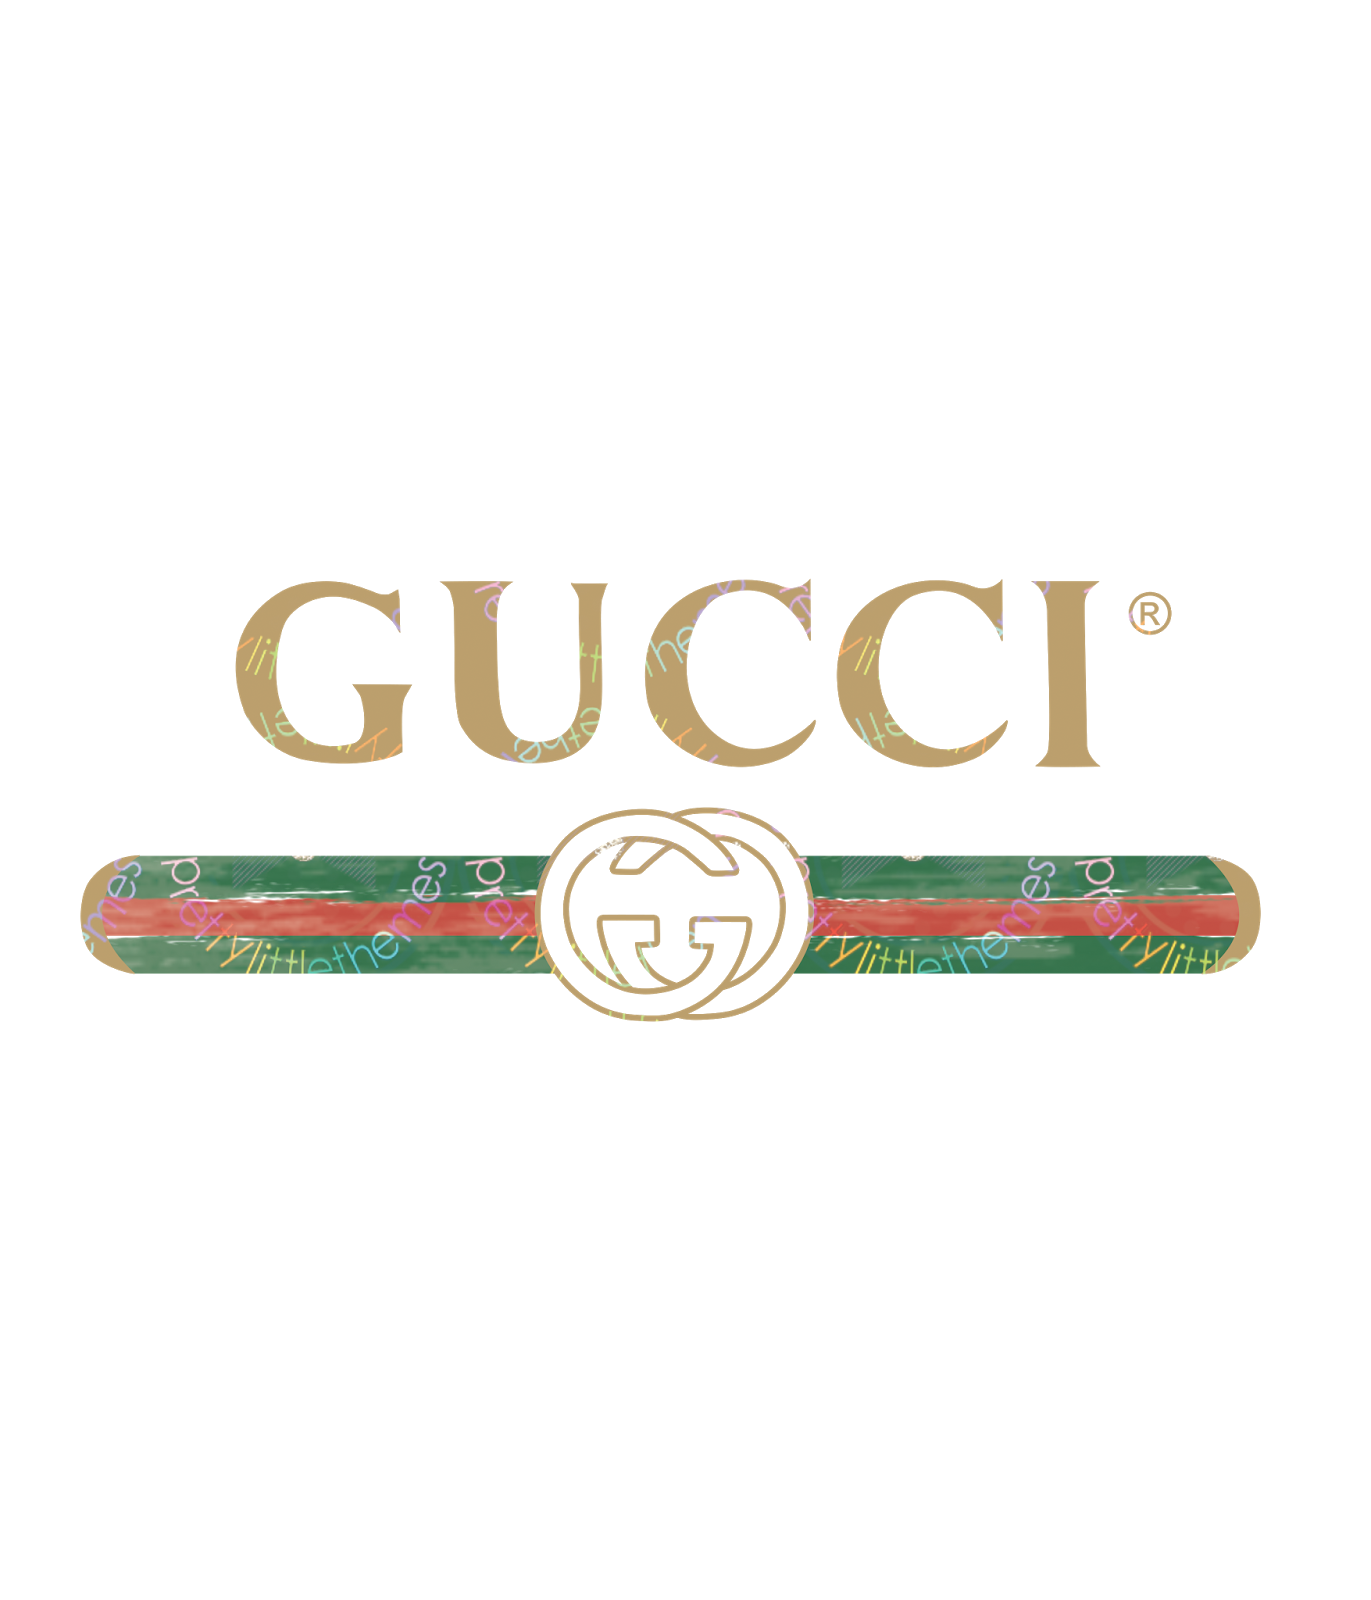 Gucci Shirt Roblox The Art Of Mike Mignola - gucci shirt id for roblox rldm